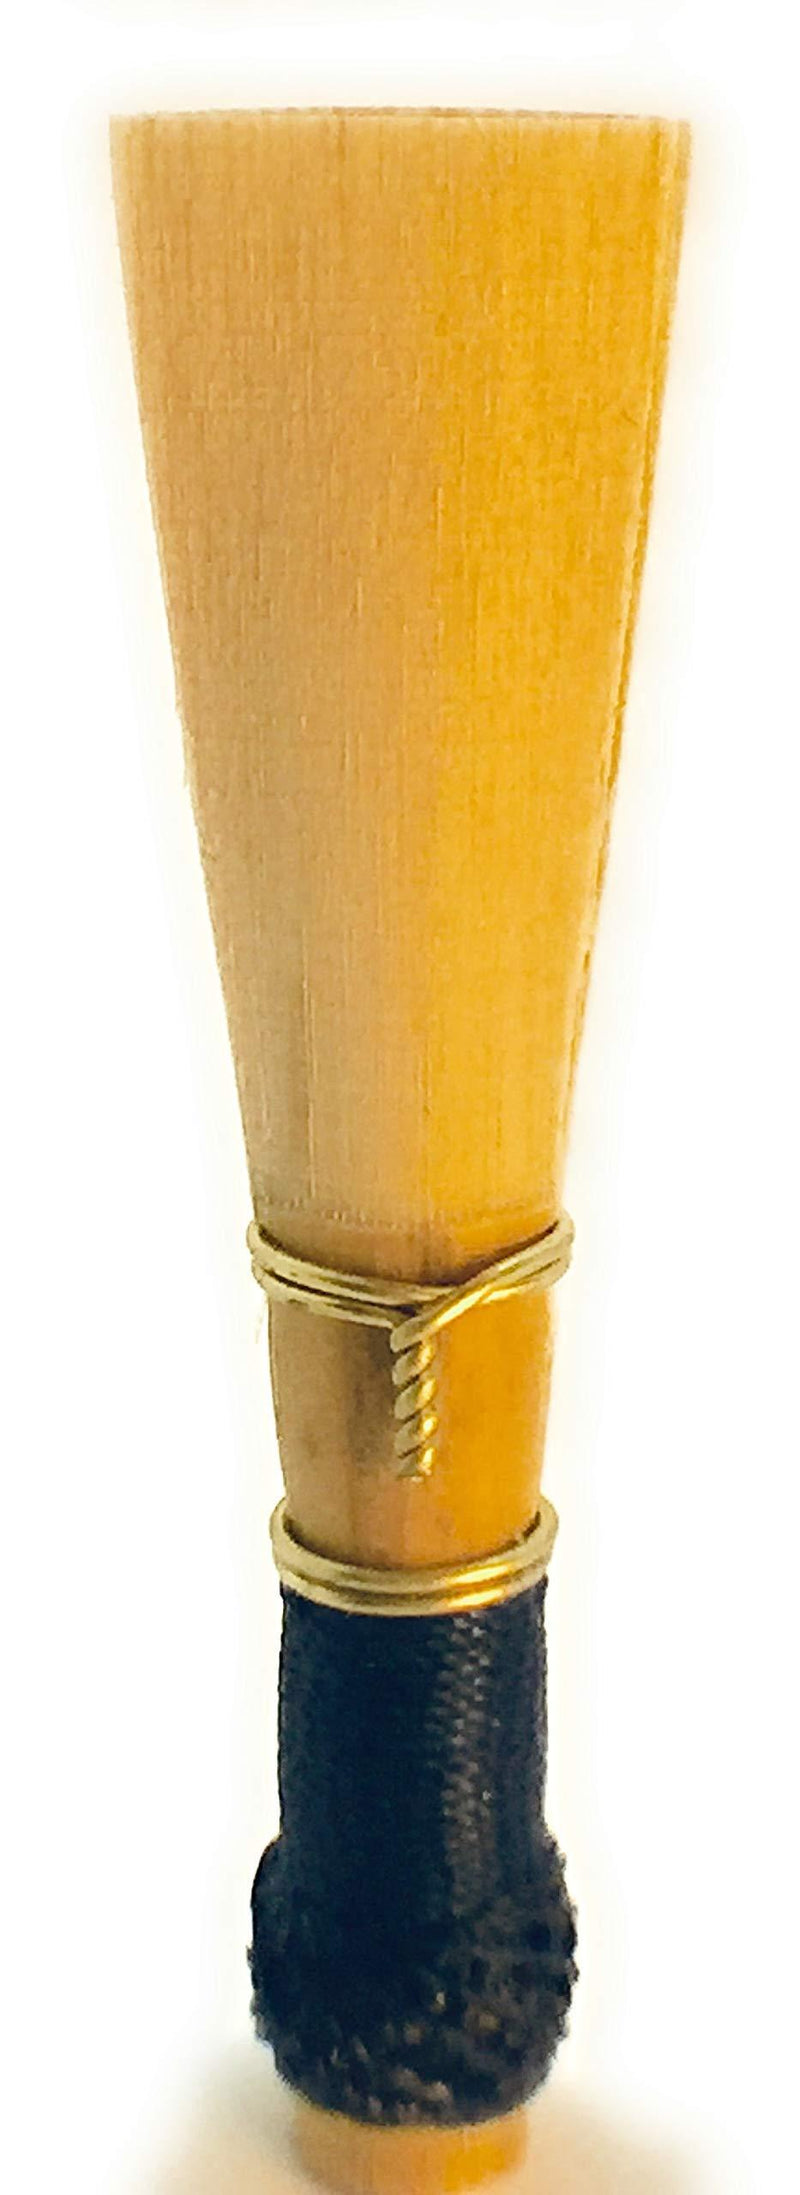 Mallar Bassoon Reed, Crafted in the U.S, Medium Hardness